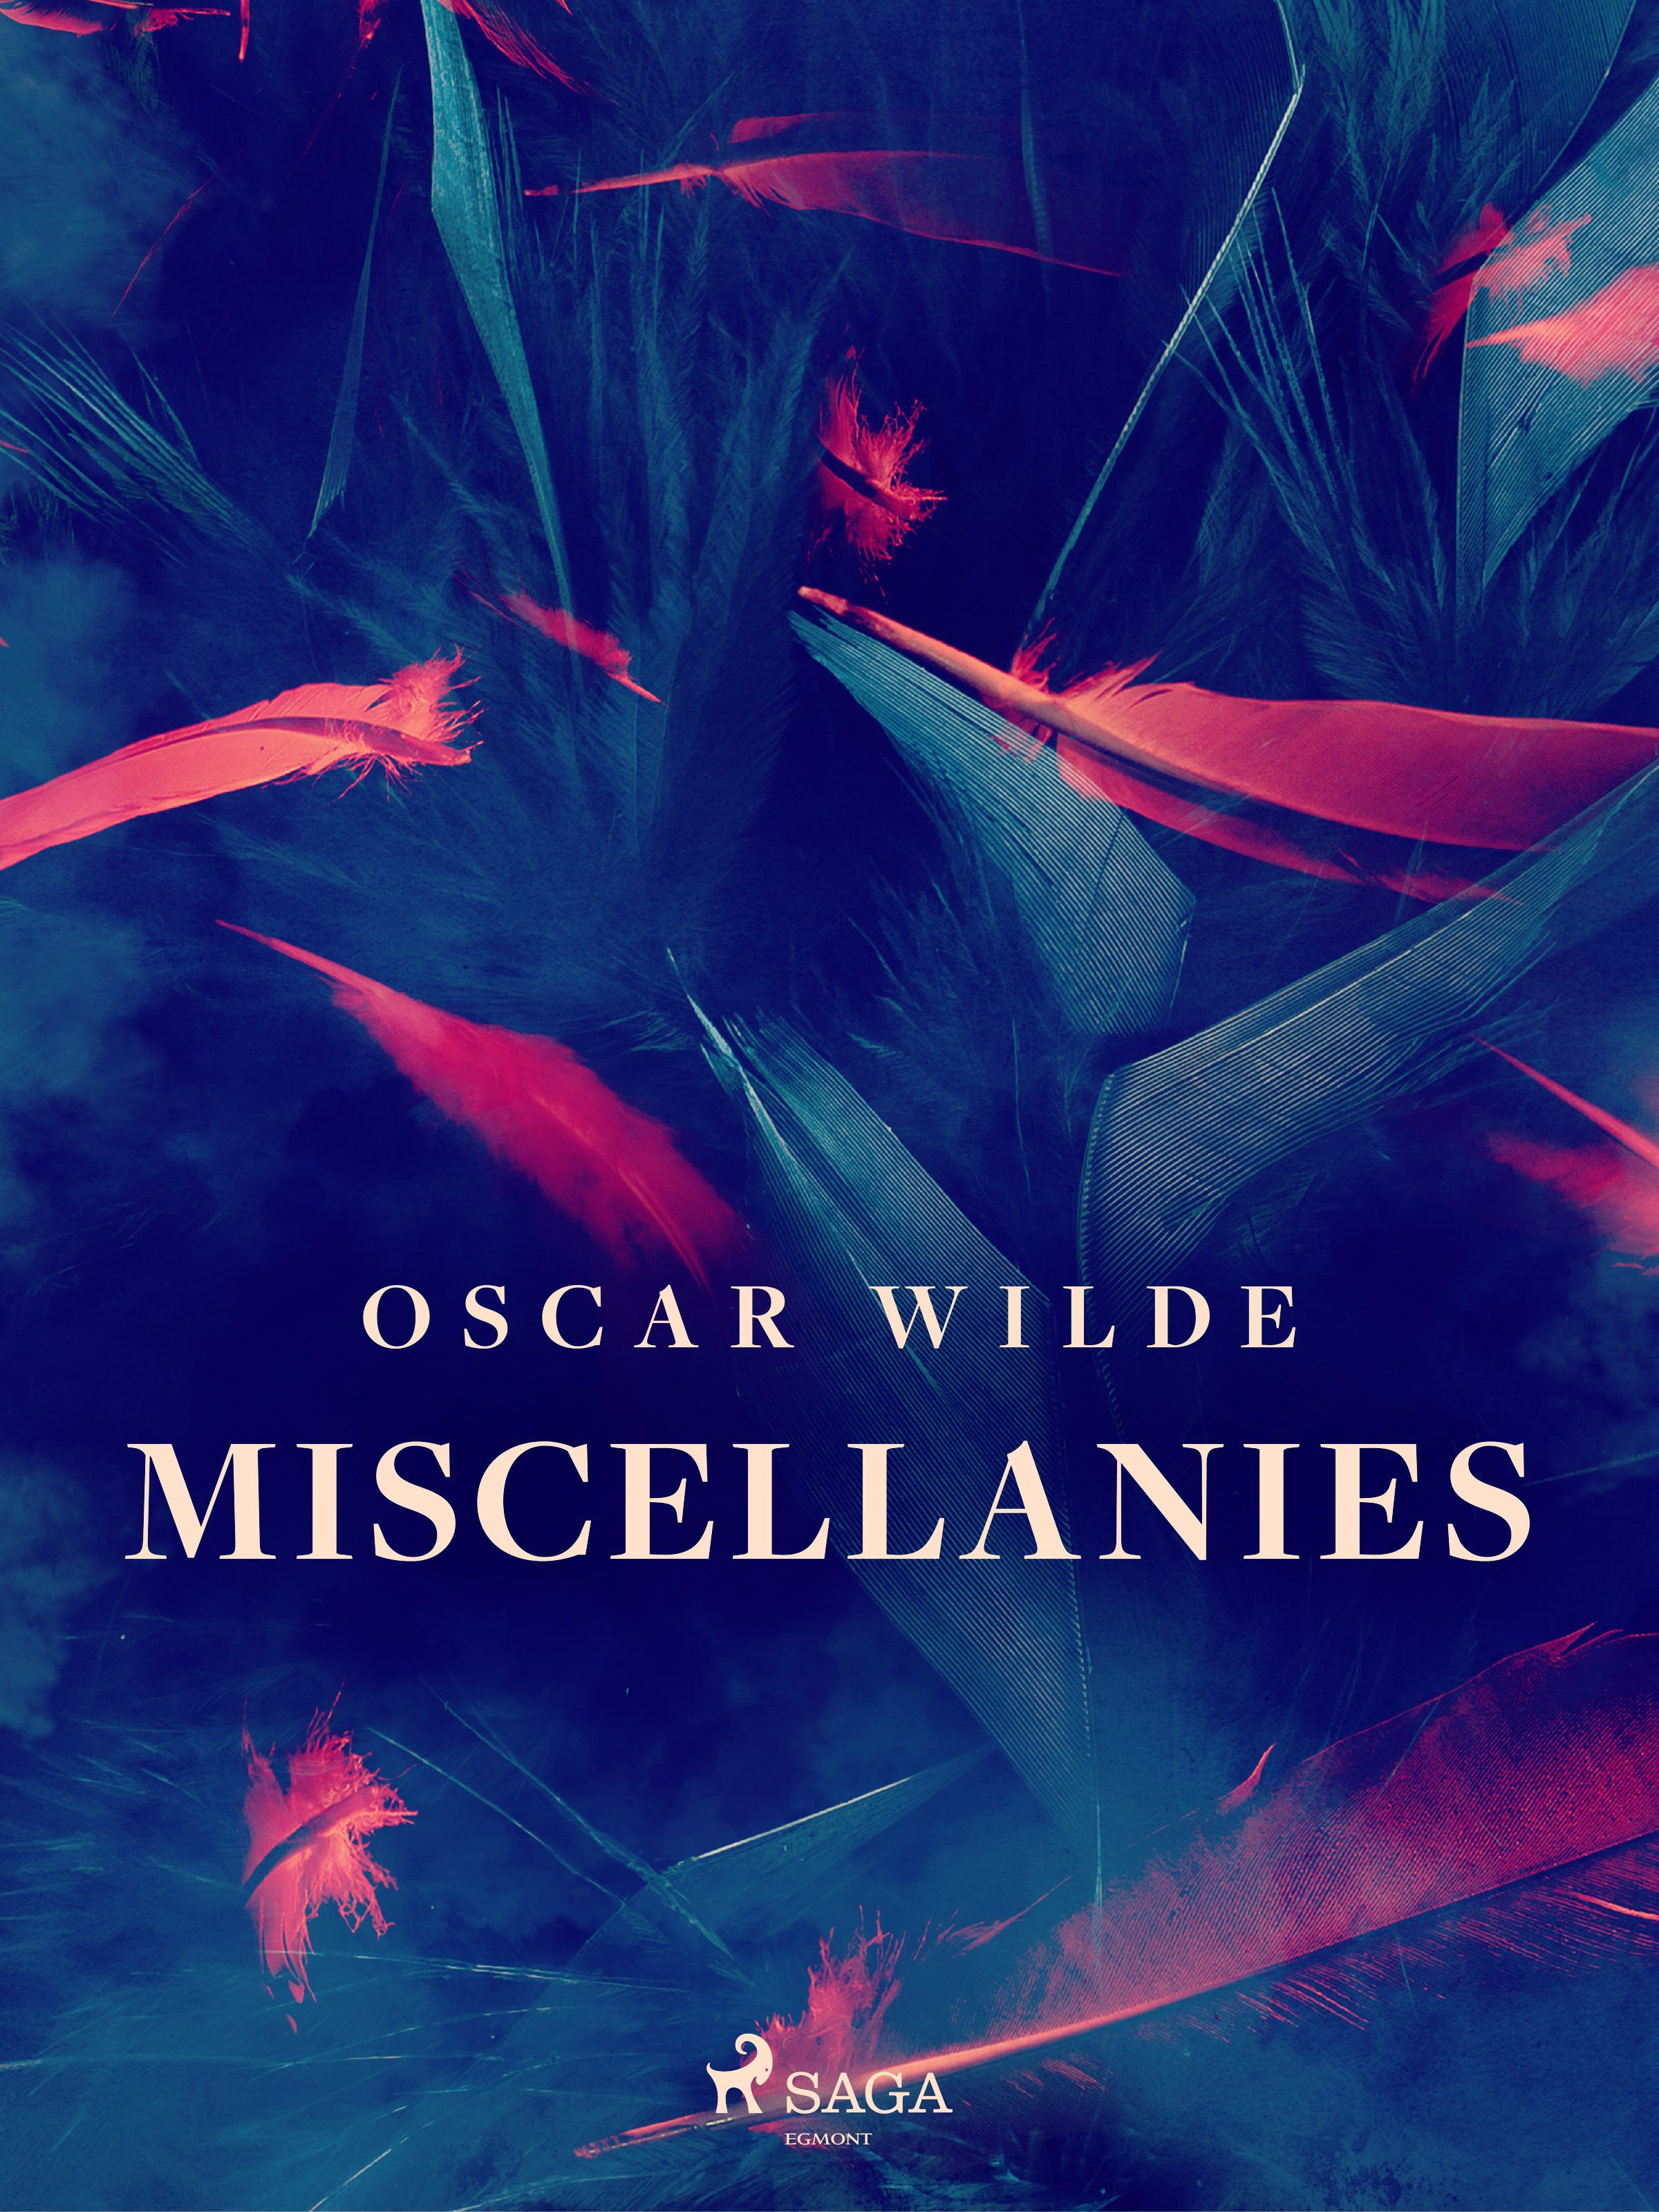 Miscellanies, e-bog af Oscar Wilde